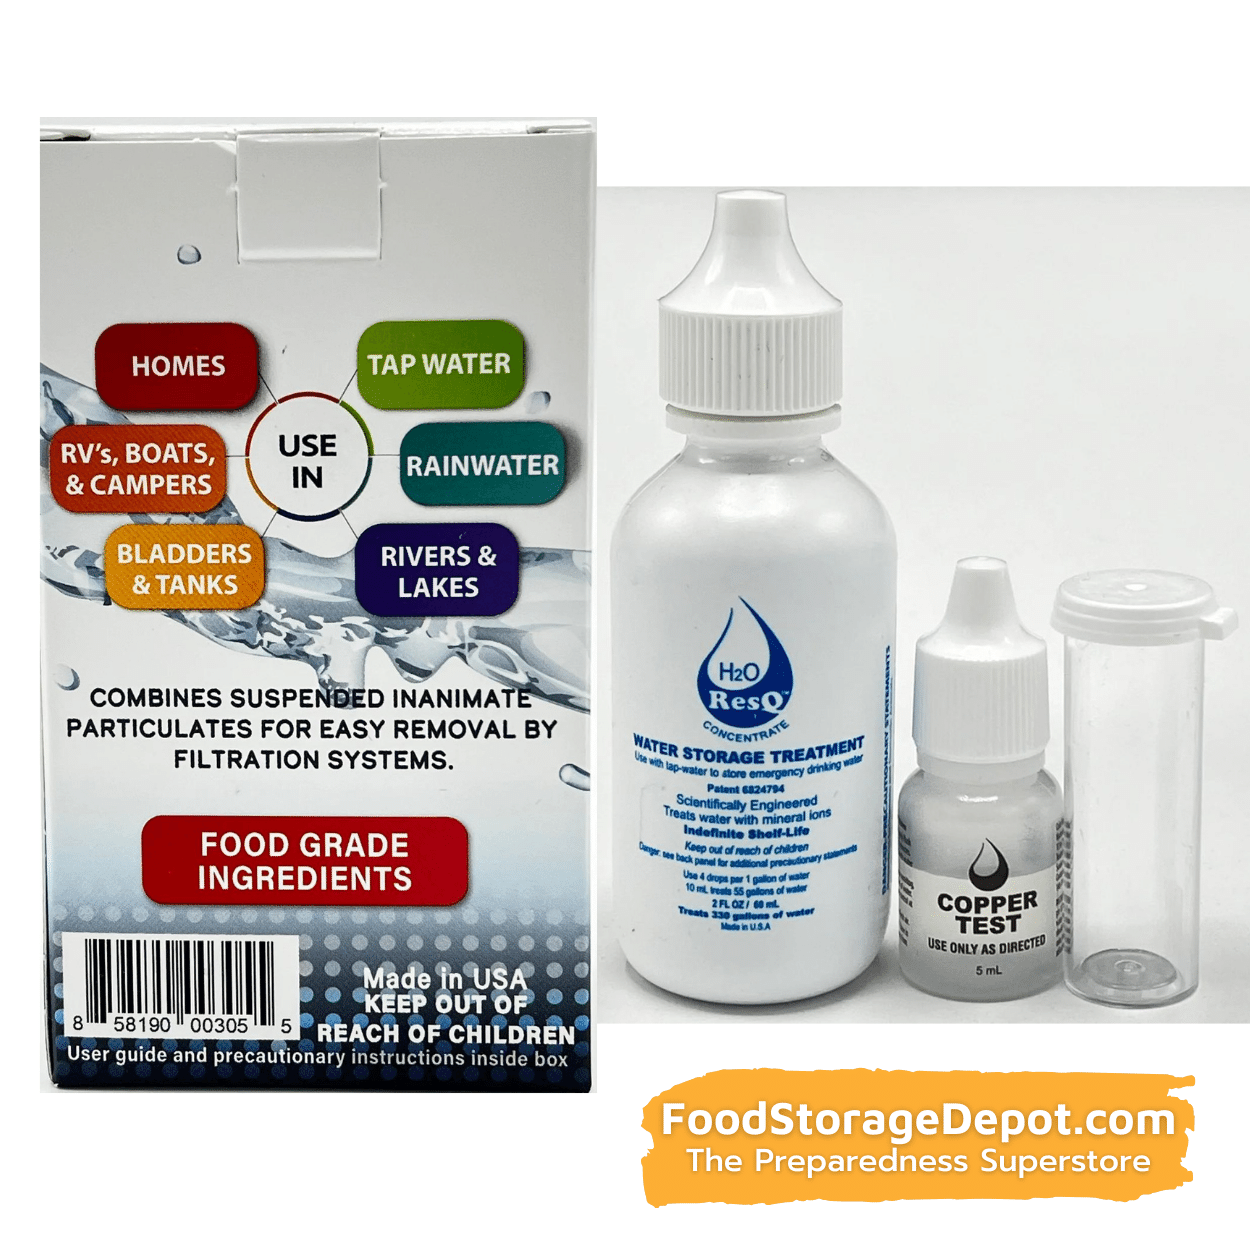 H2O ResQ Water Treatment Kit (Biofilm Defender)